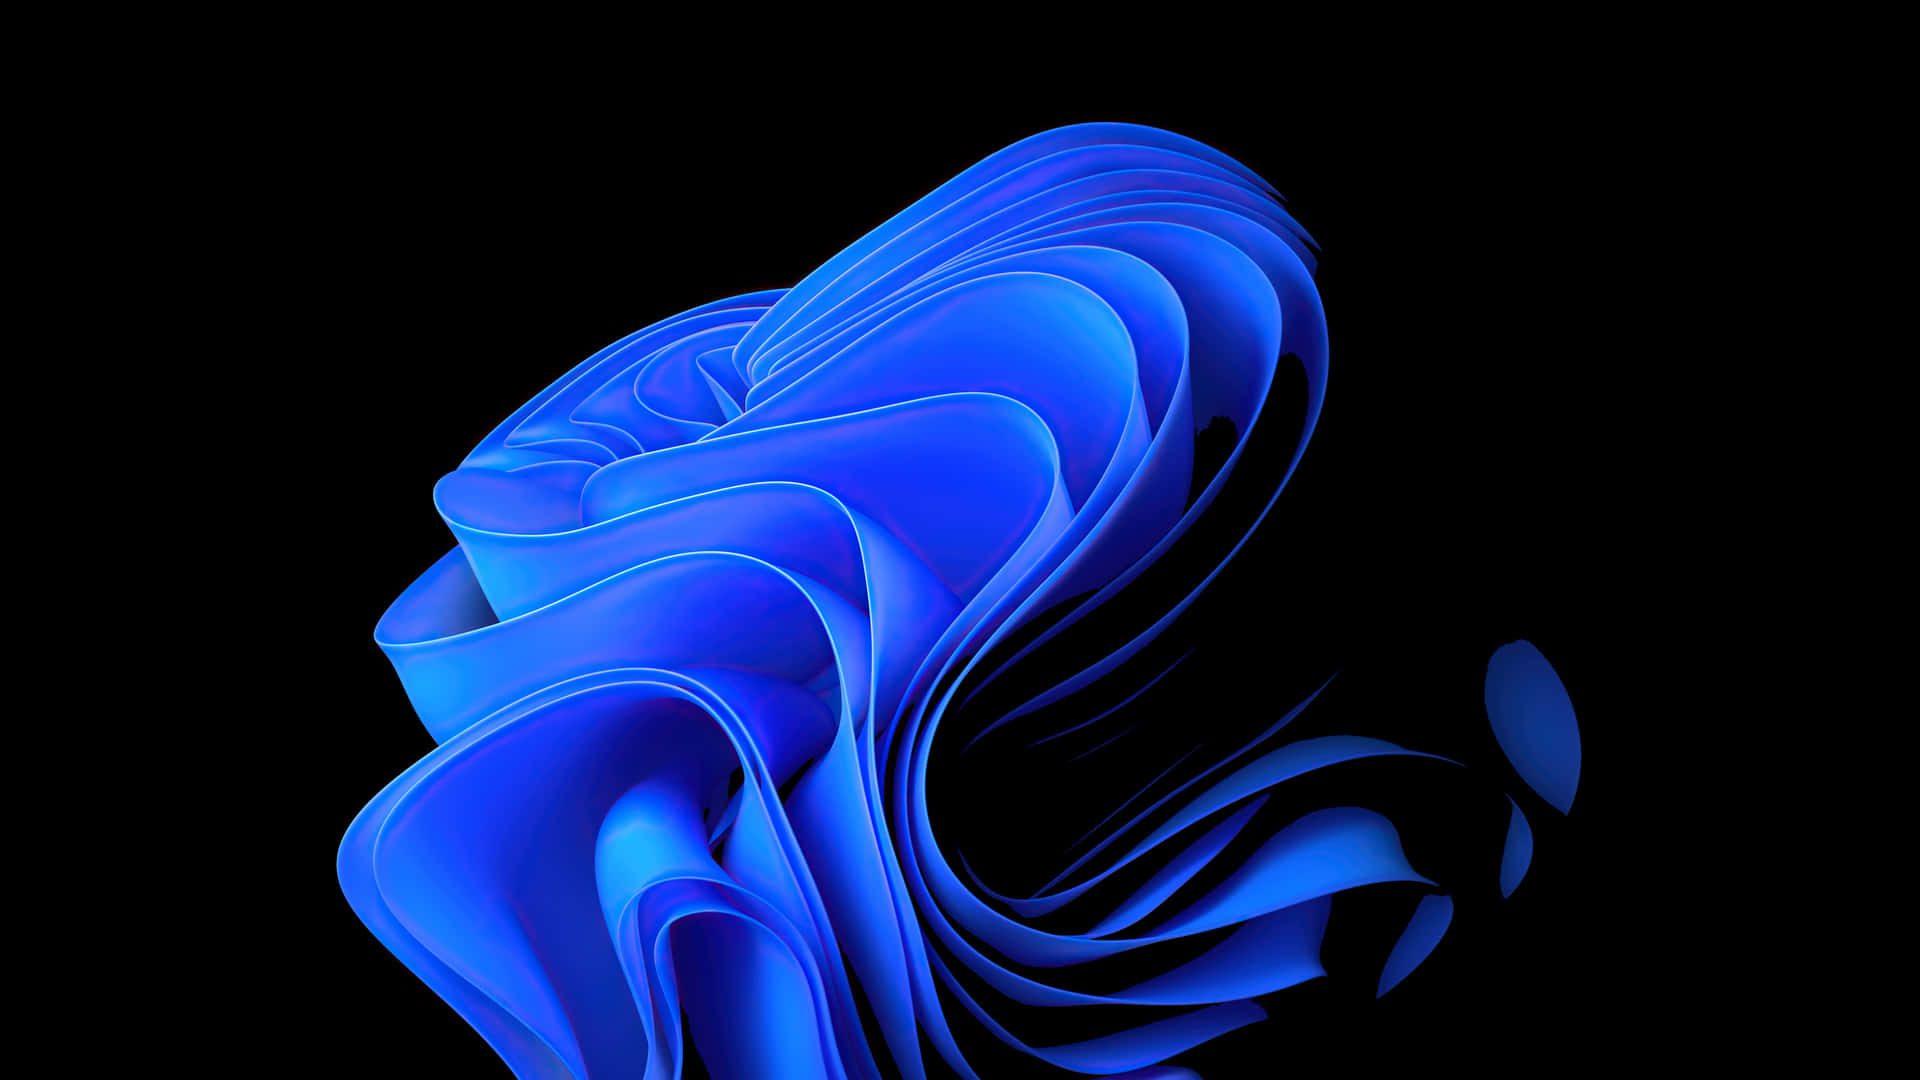 Undiseño Abstracto Impactante Con Un Hermoso Fondo Amoled Azul. Fondo de pantalla